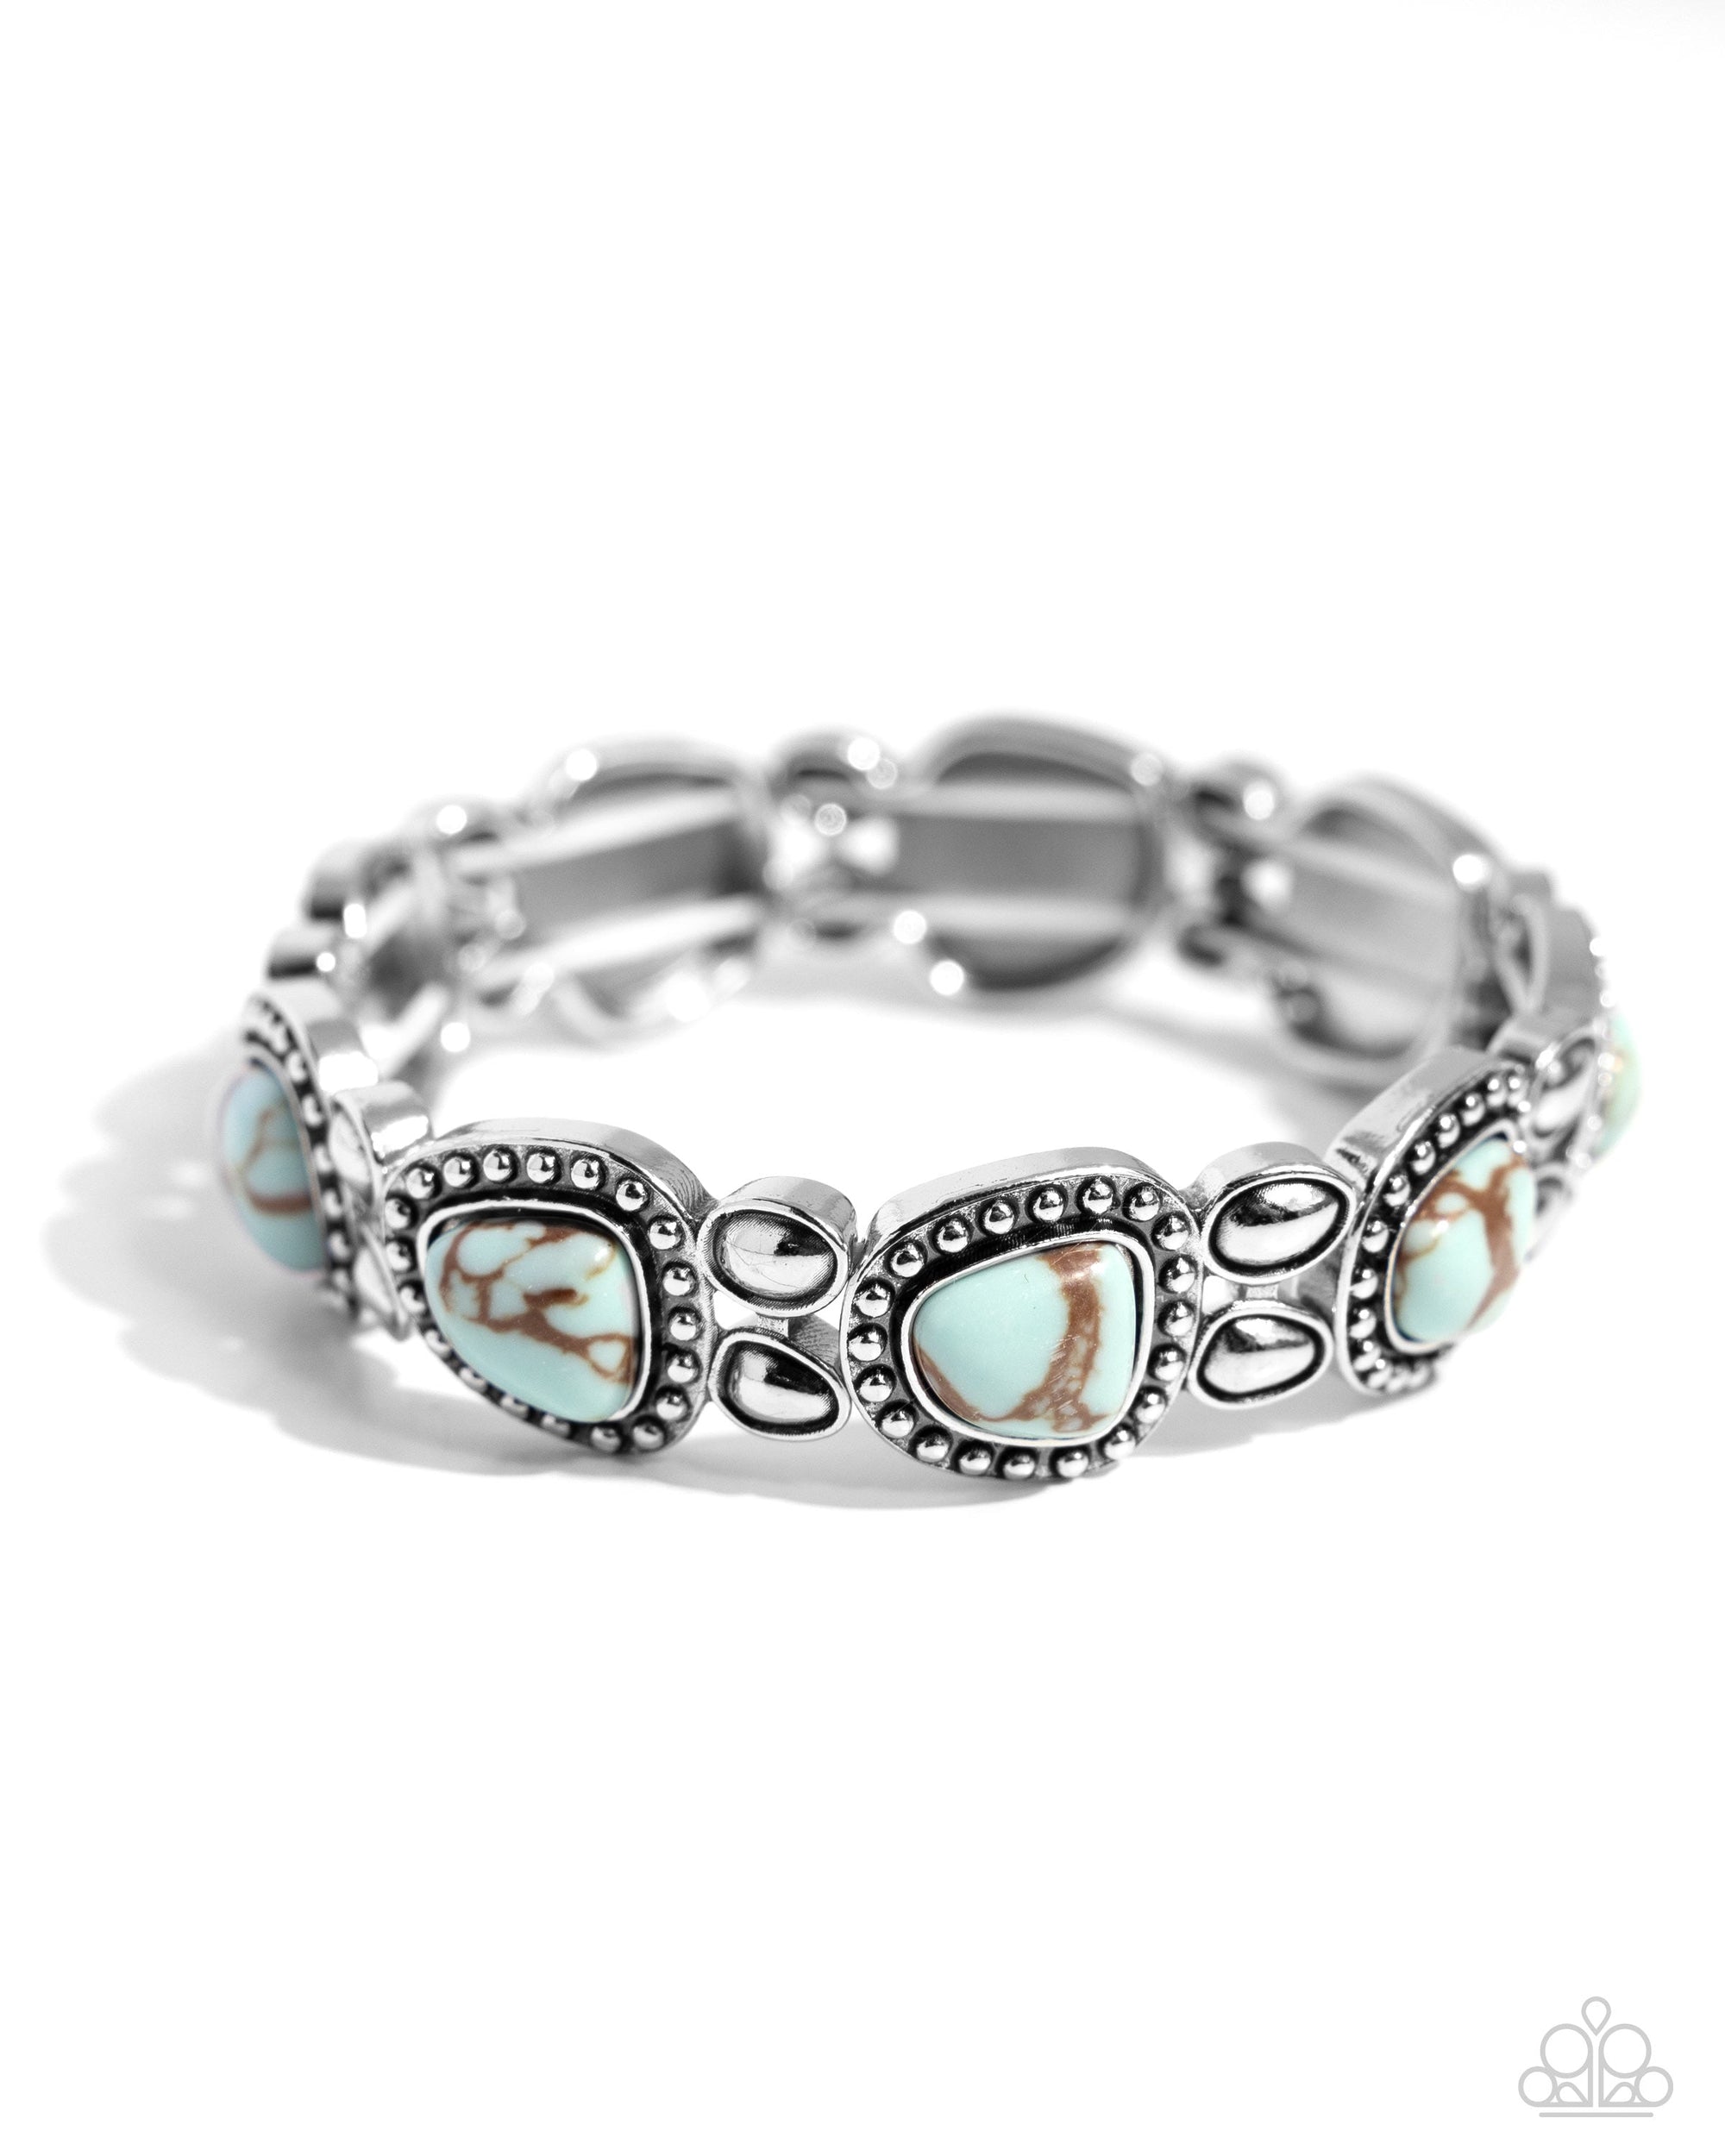 Harmonious Headliner Blue Stone Bracelet - Paparazzi Accessories- lightbox - CarasShop.com - $5 Jewelry by Cara Jewels